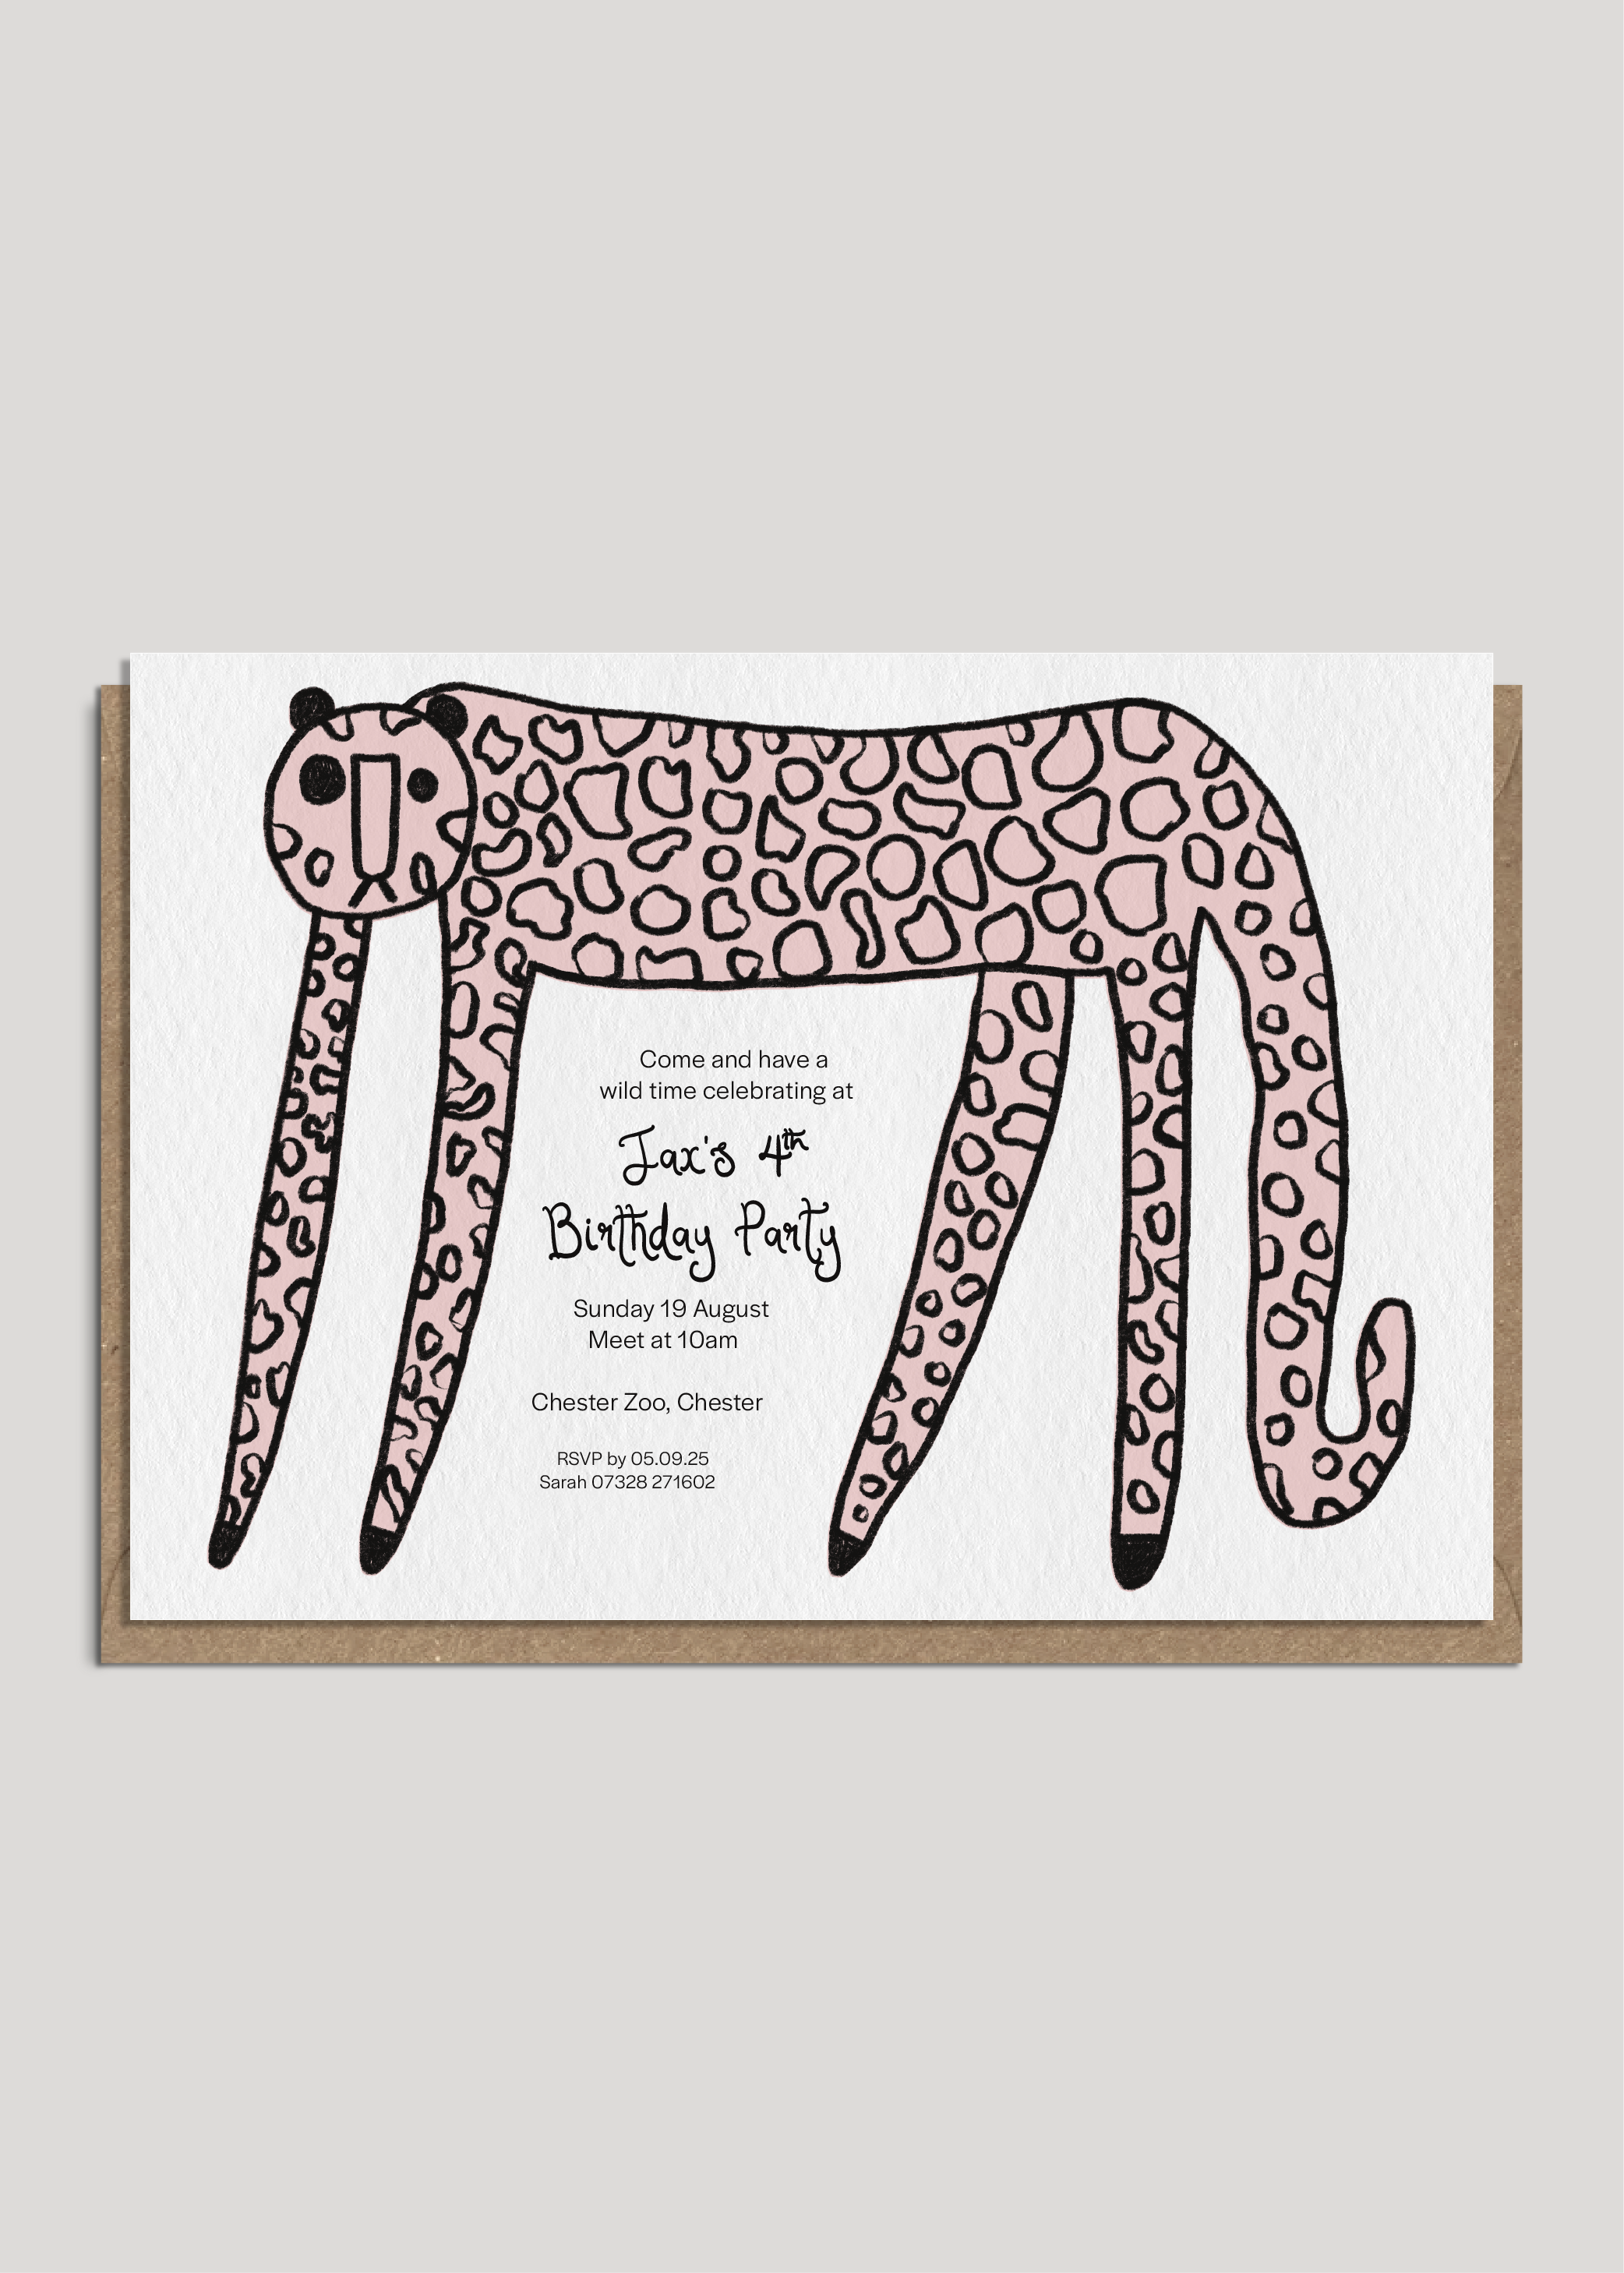 Jax's Leopard Invite — Printed